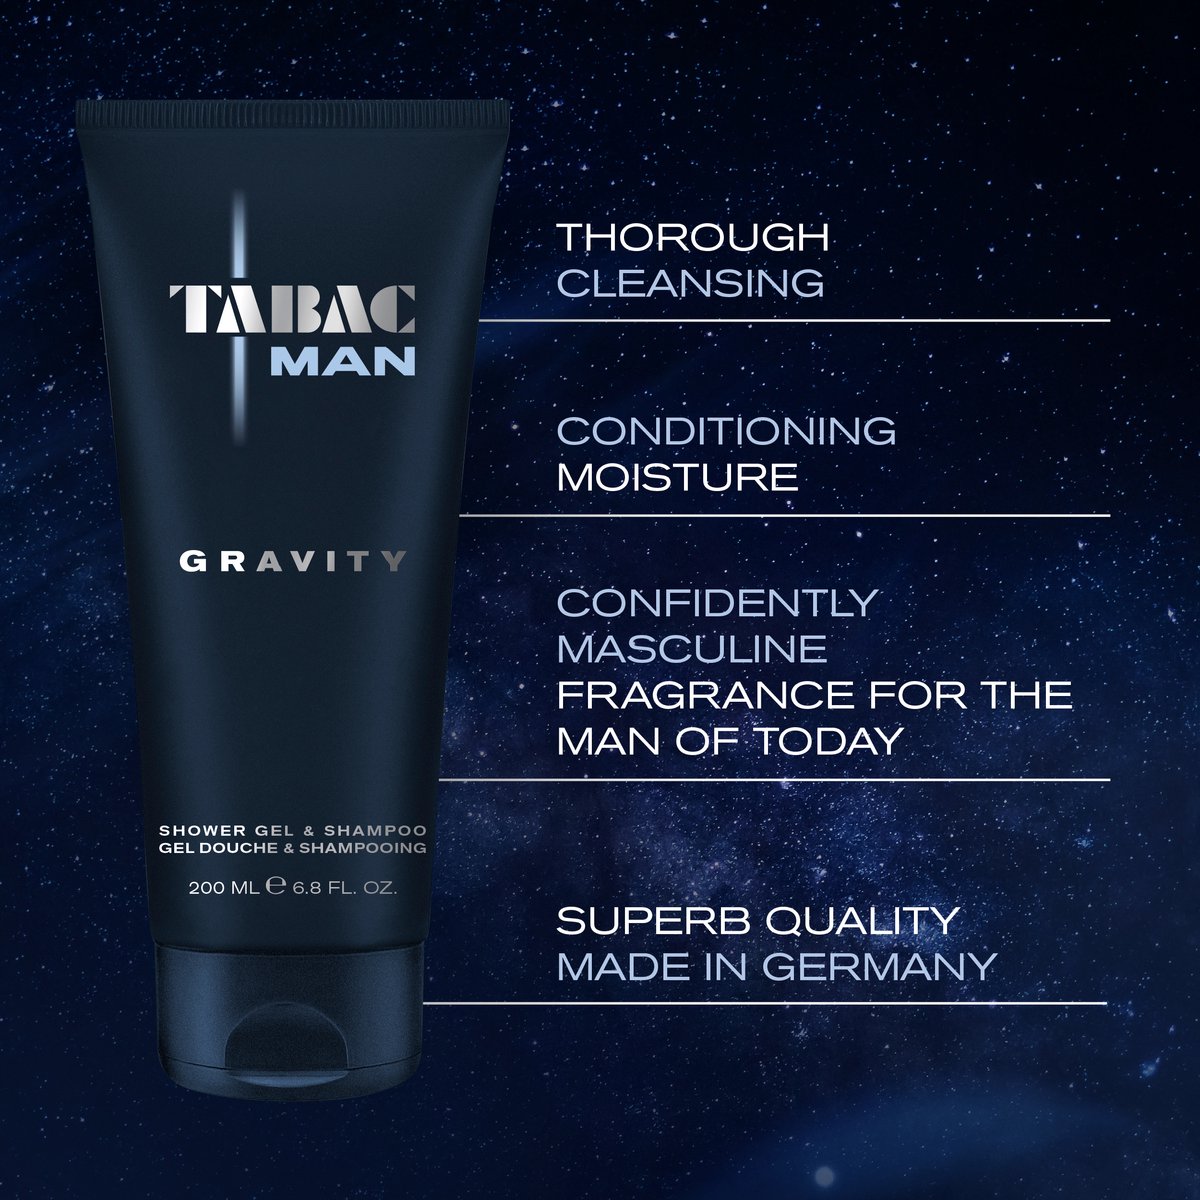 Tabac Man Gravity Showergel en Shampoo 200ml